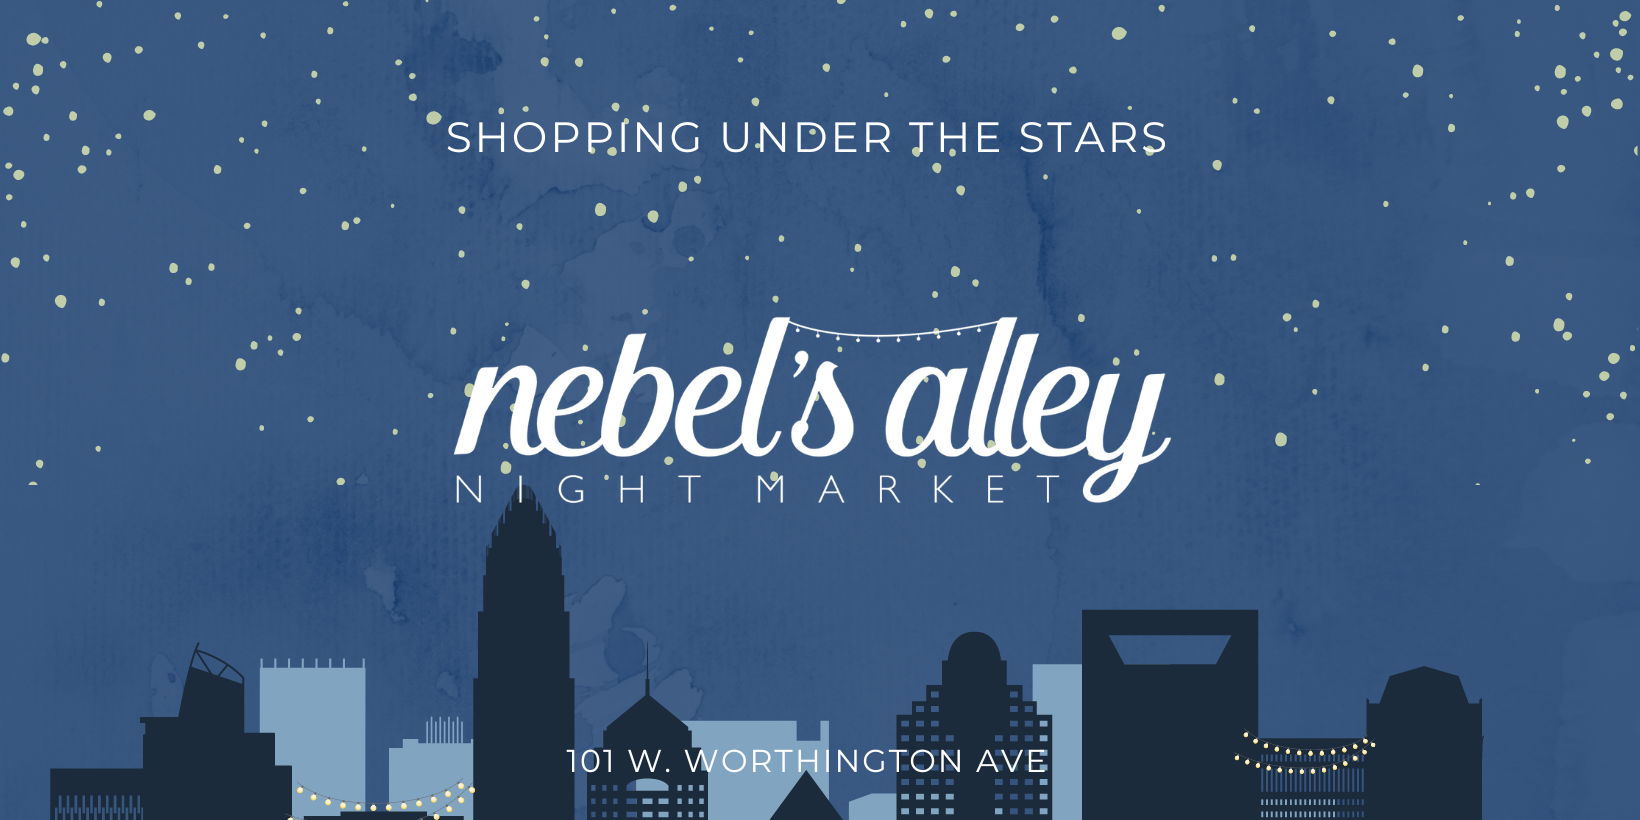 Nebel's Alley Night Market promotional image